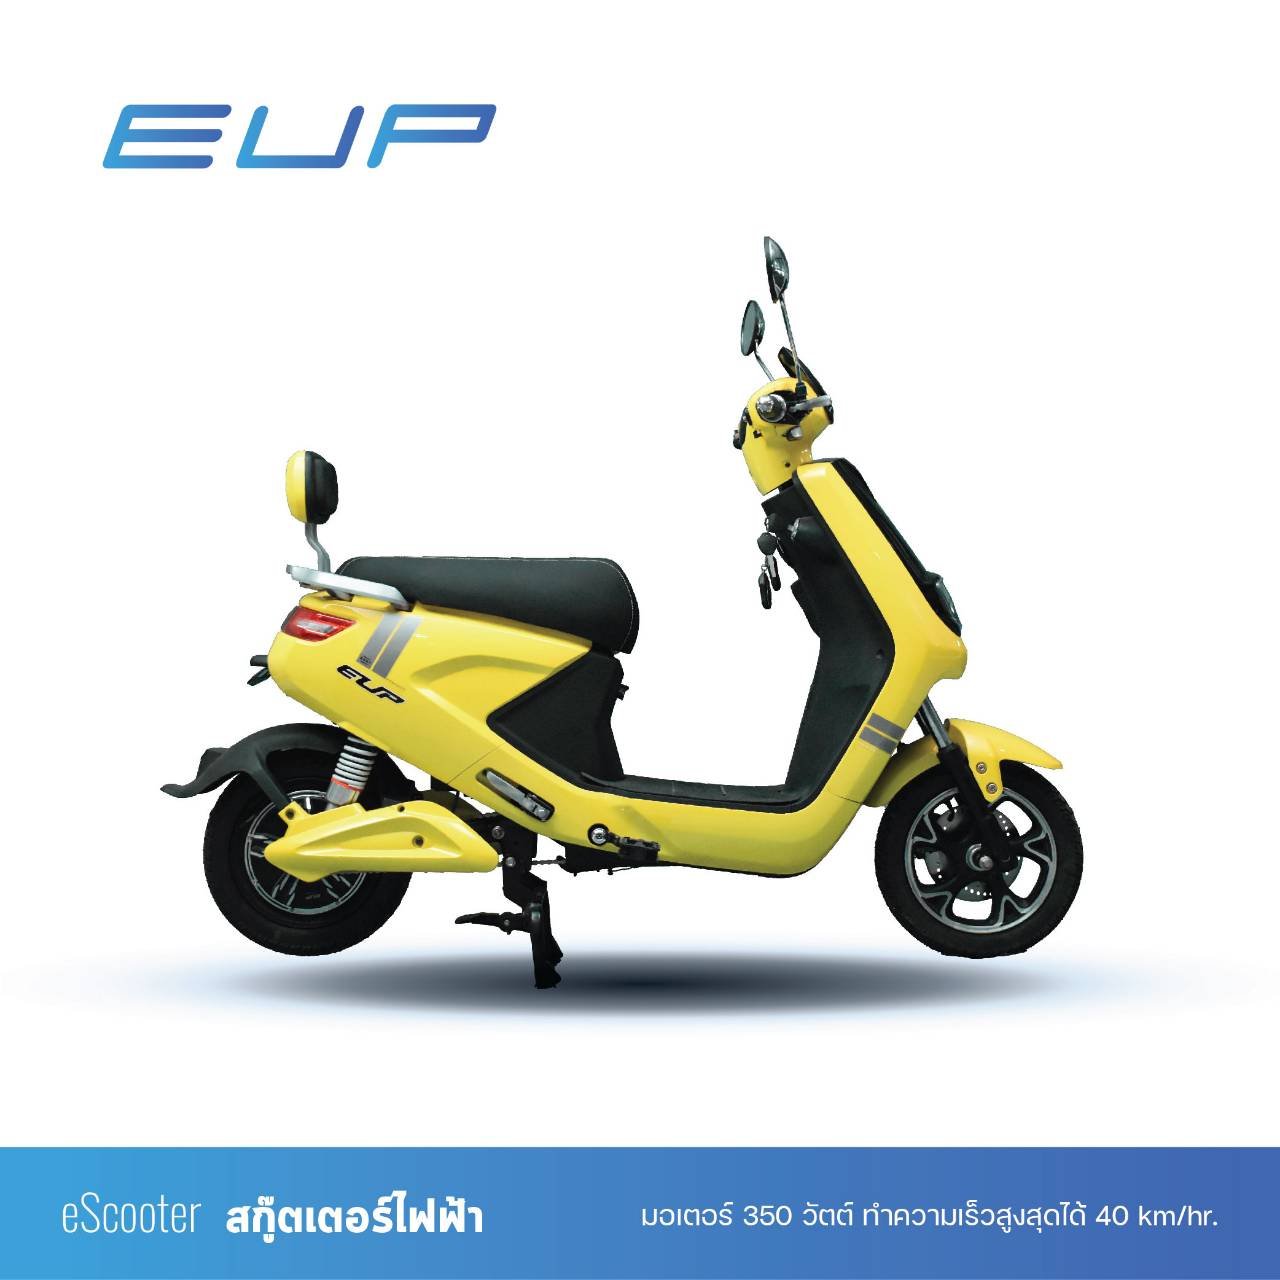 Escooter electric motorbike Samui Thailand